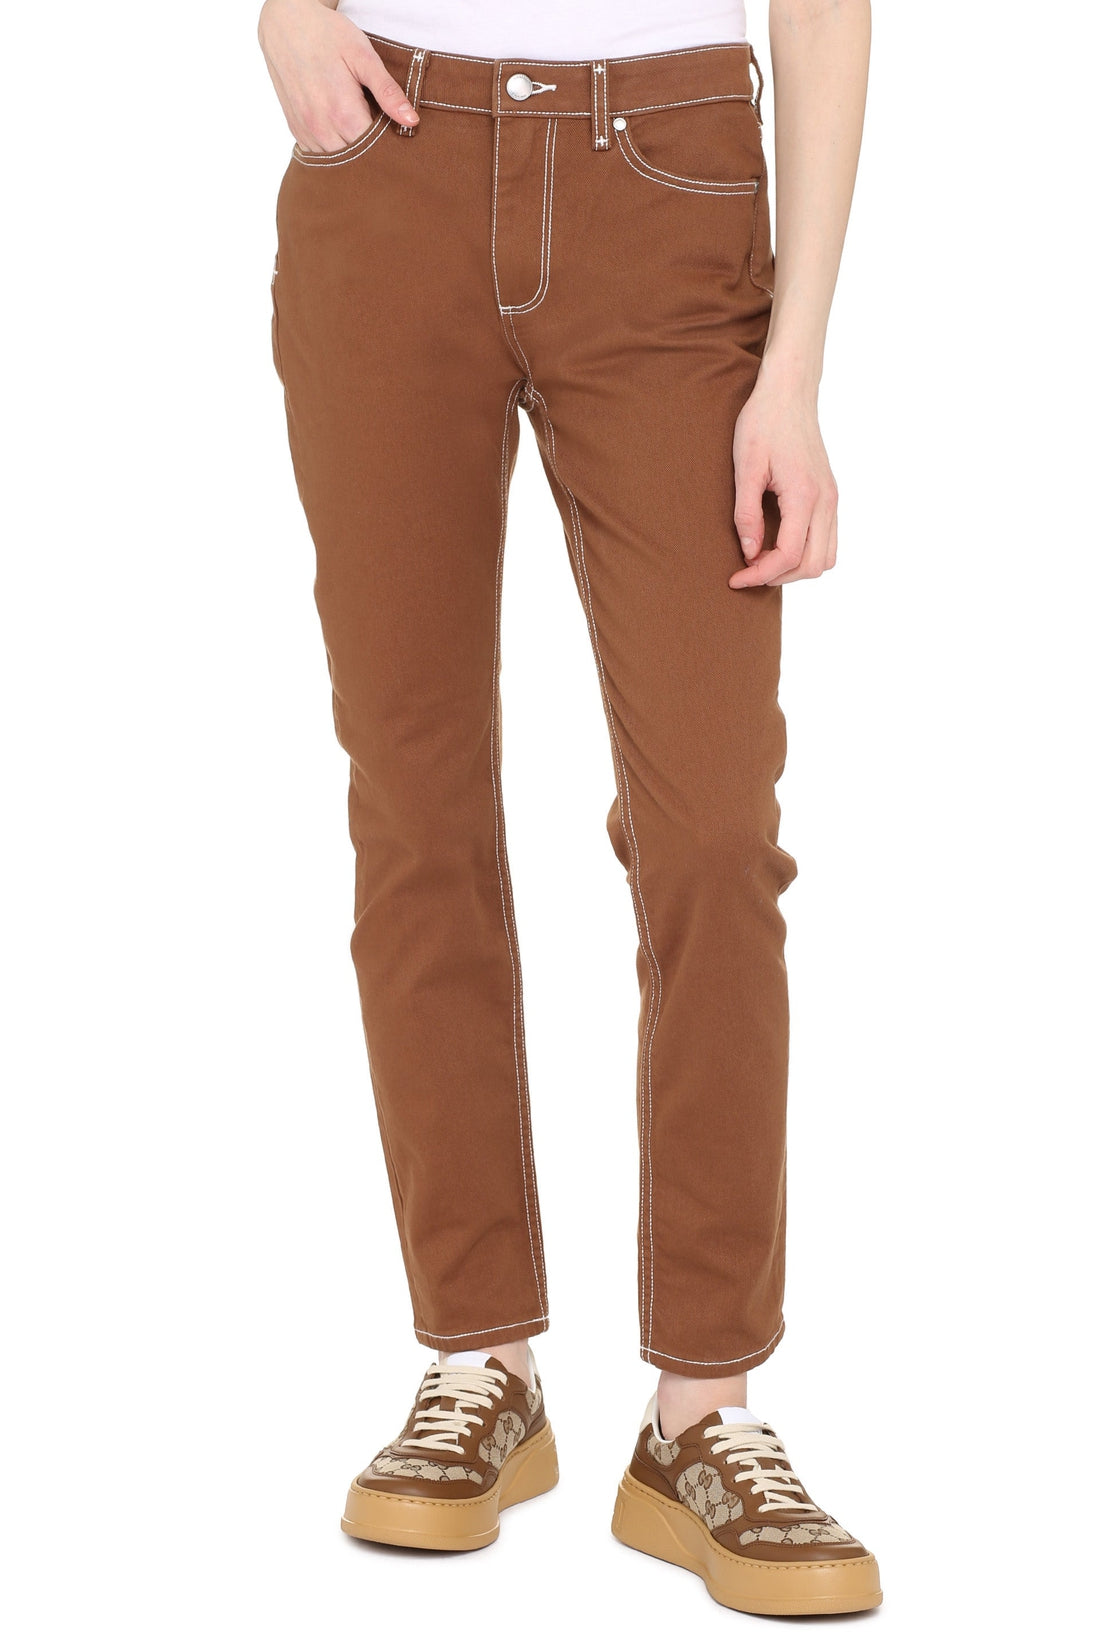 Burberry-OUTLET-SALE-5-pocket skinny jeans-ARCHIVIST